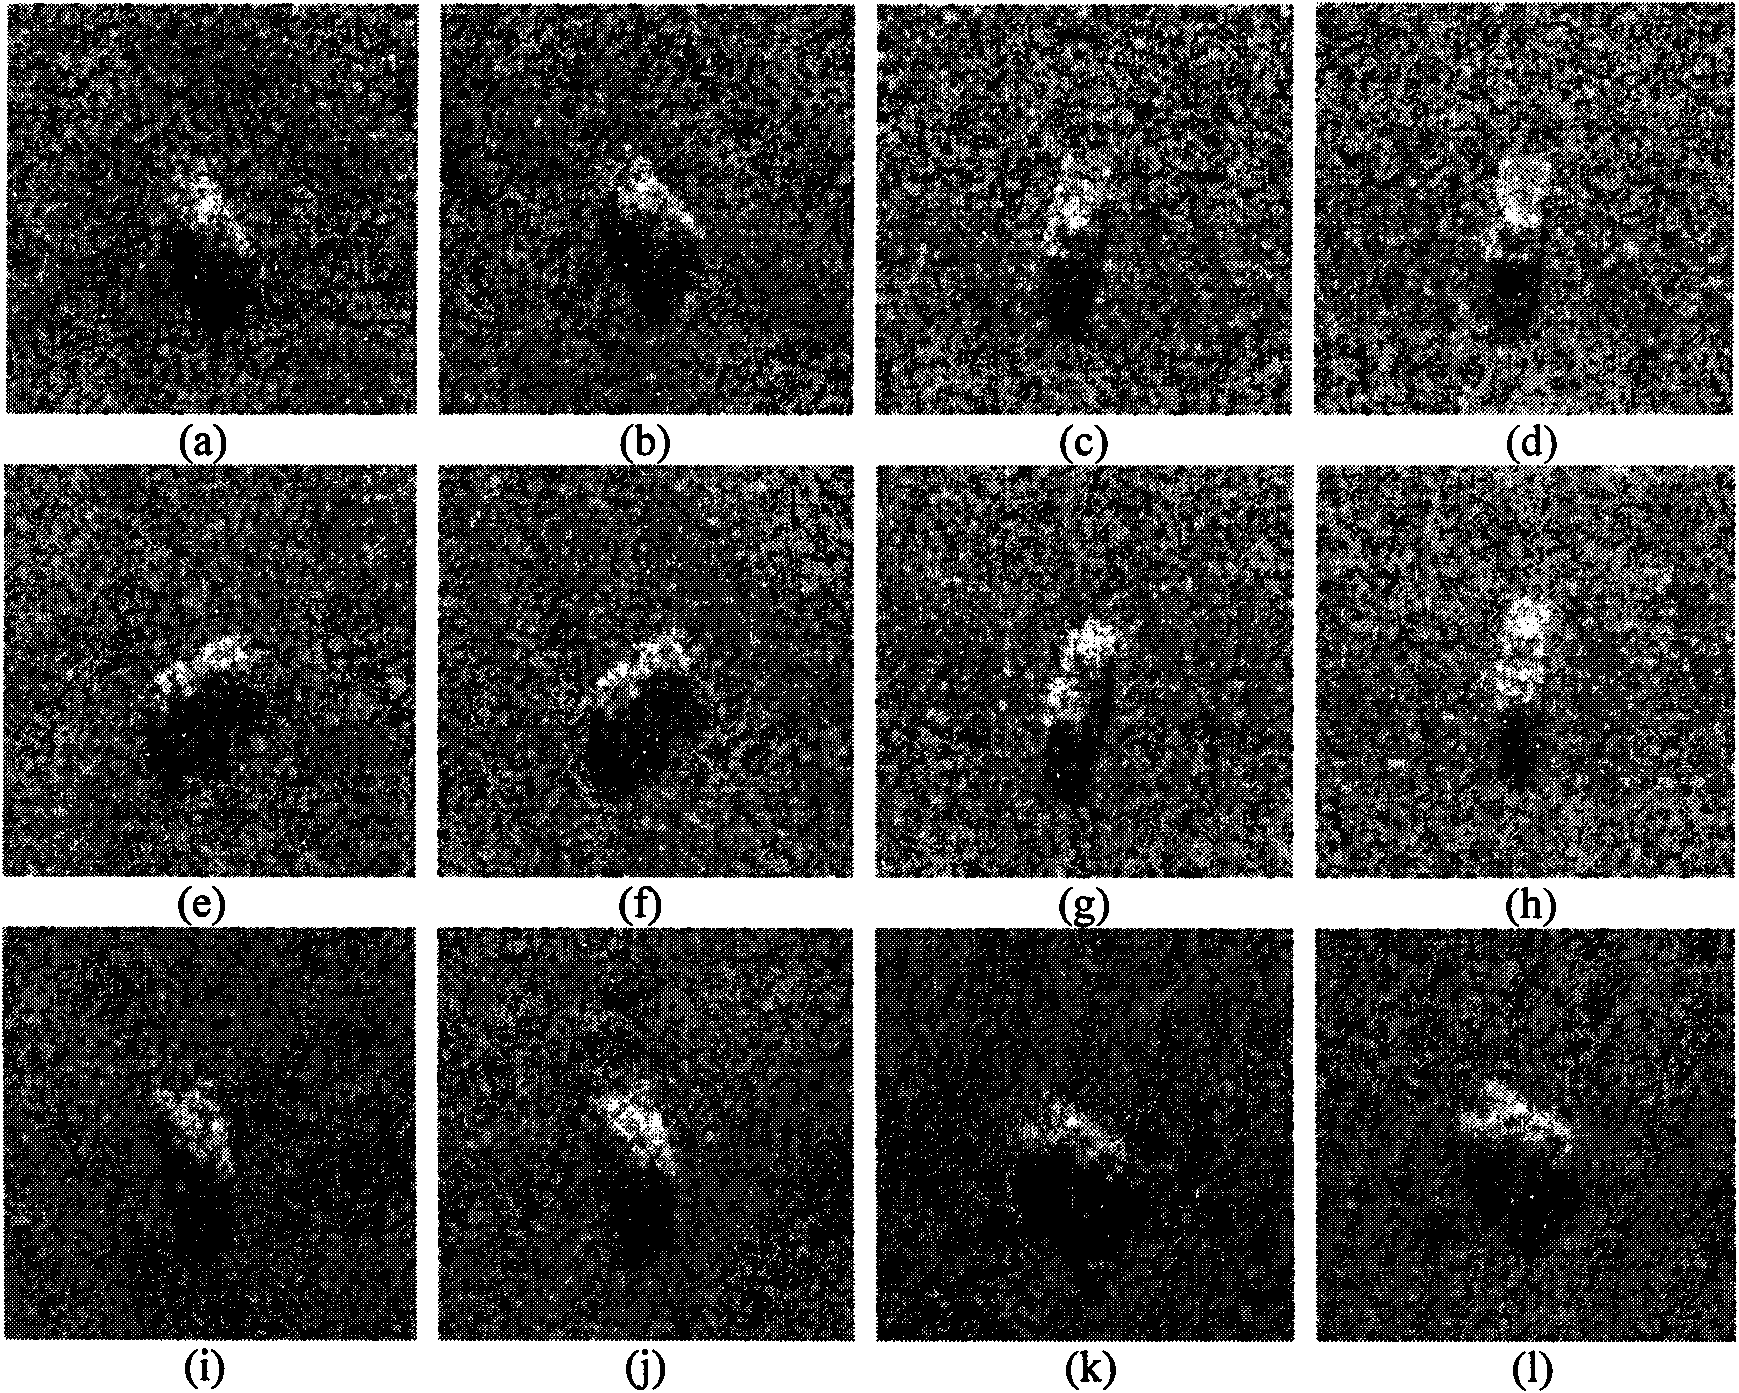 Synthetic aperture radar image target identification method based on multi-parameter spectrum feature